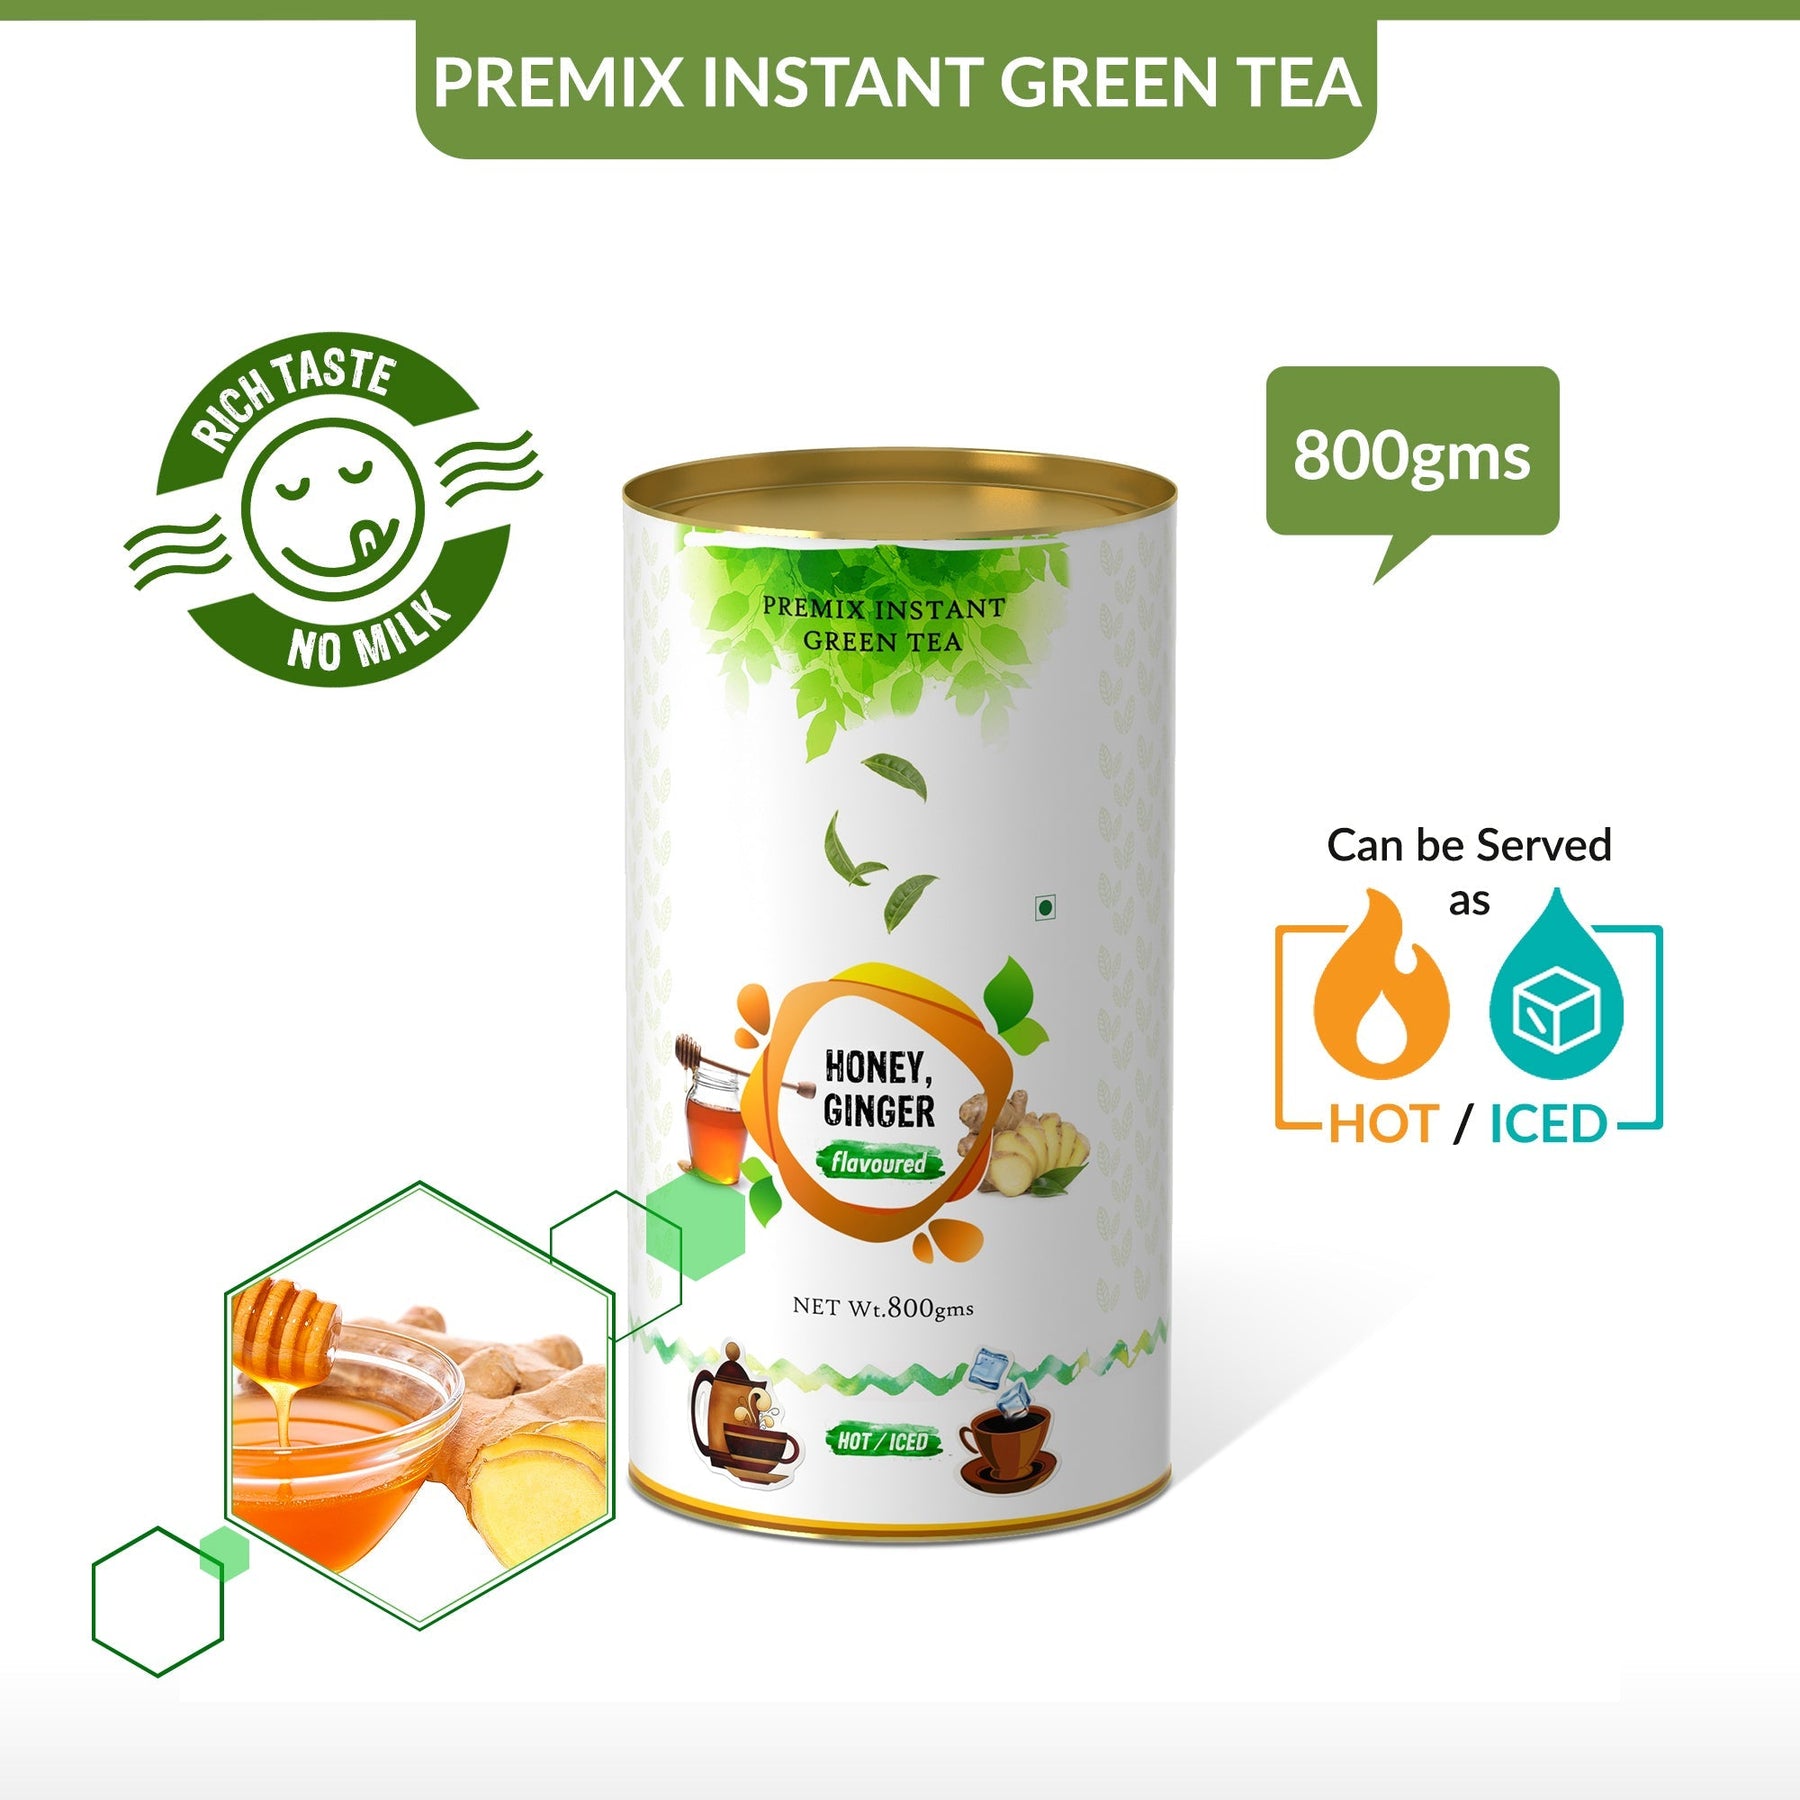 Honey Ginger Flavored Instant Green Tea - 400 gms